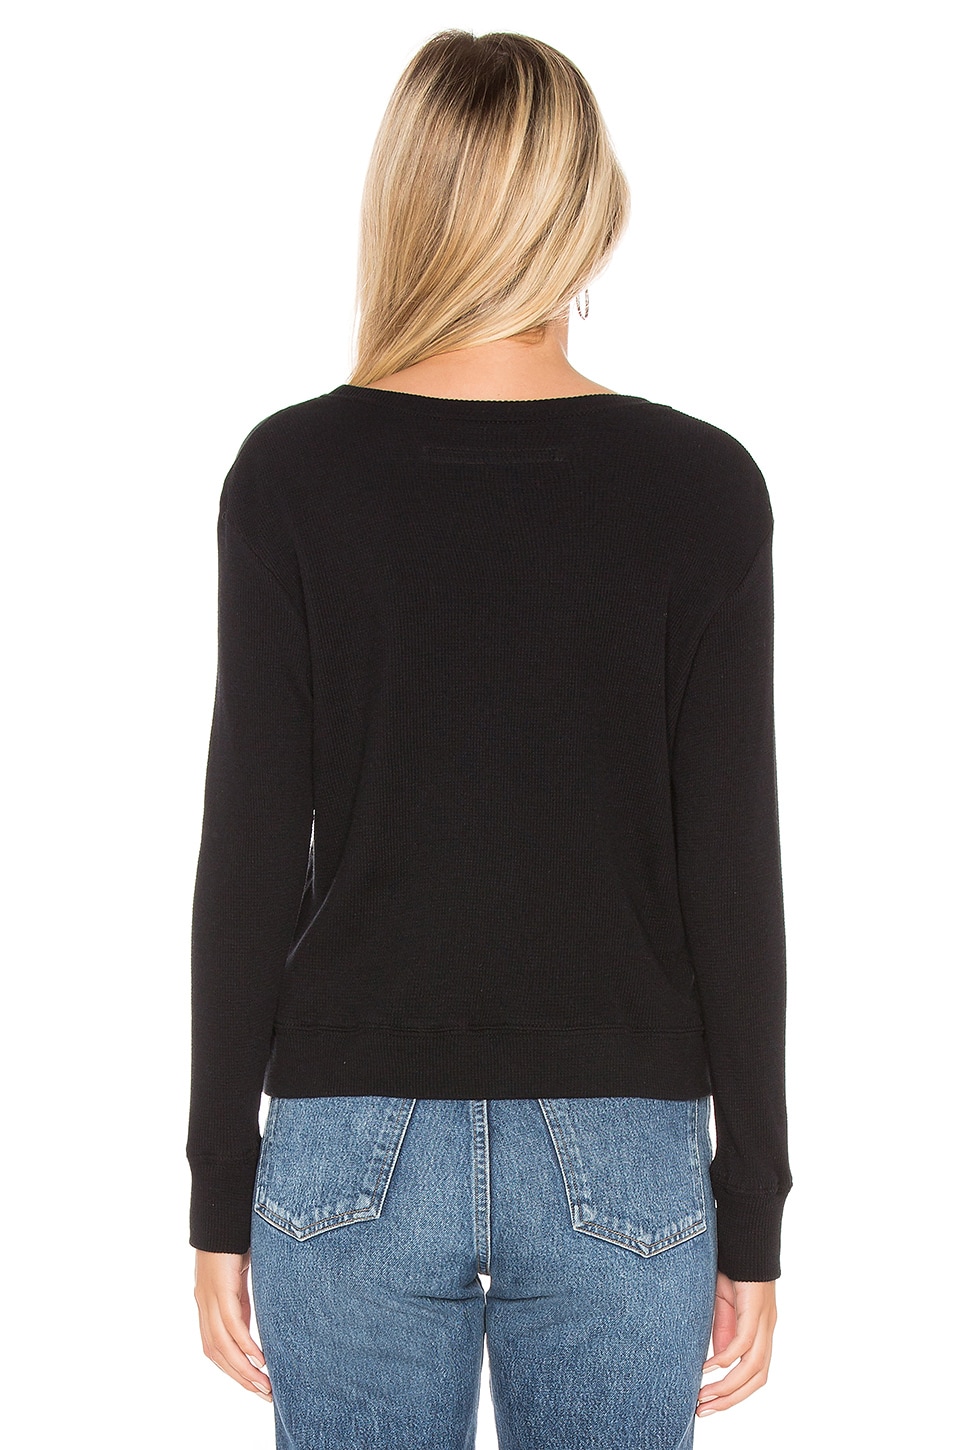 Enza Costa Cashmere Thermal Sweatshirt in Black | REVOLVE